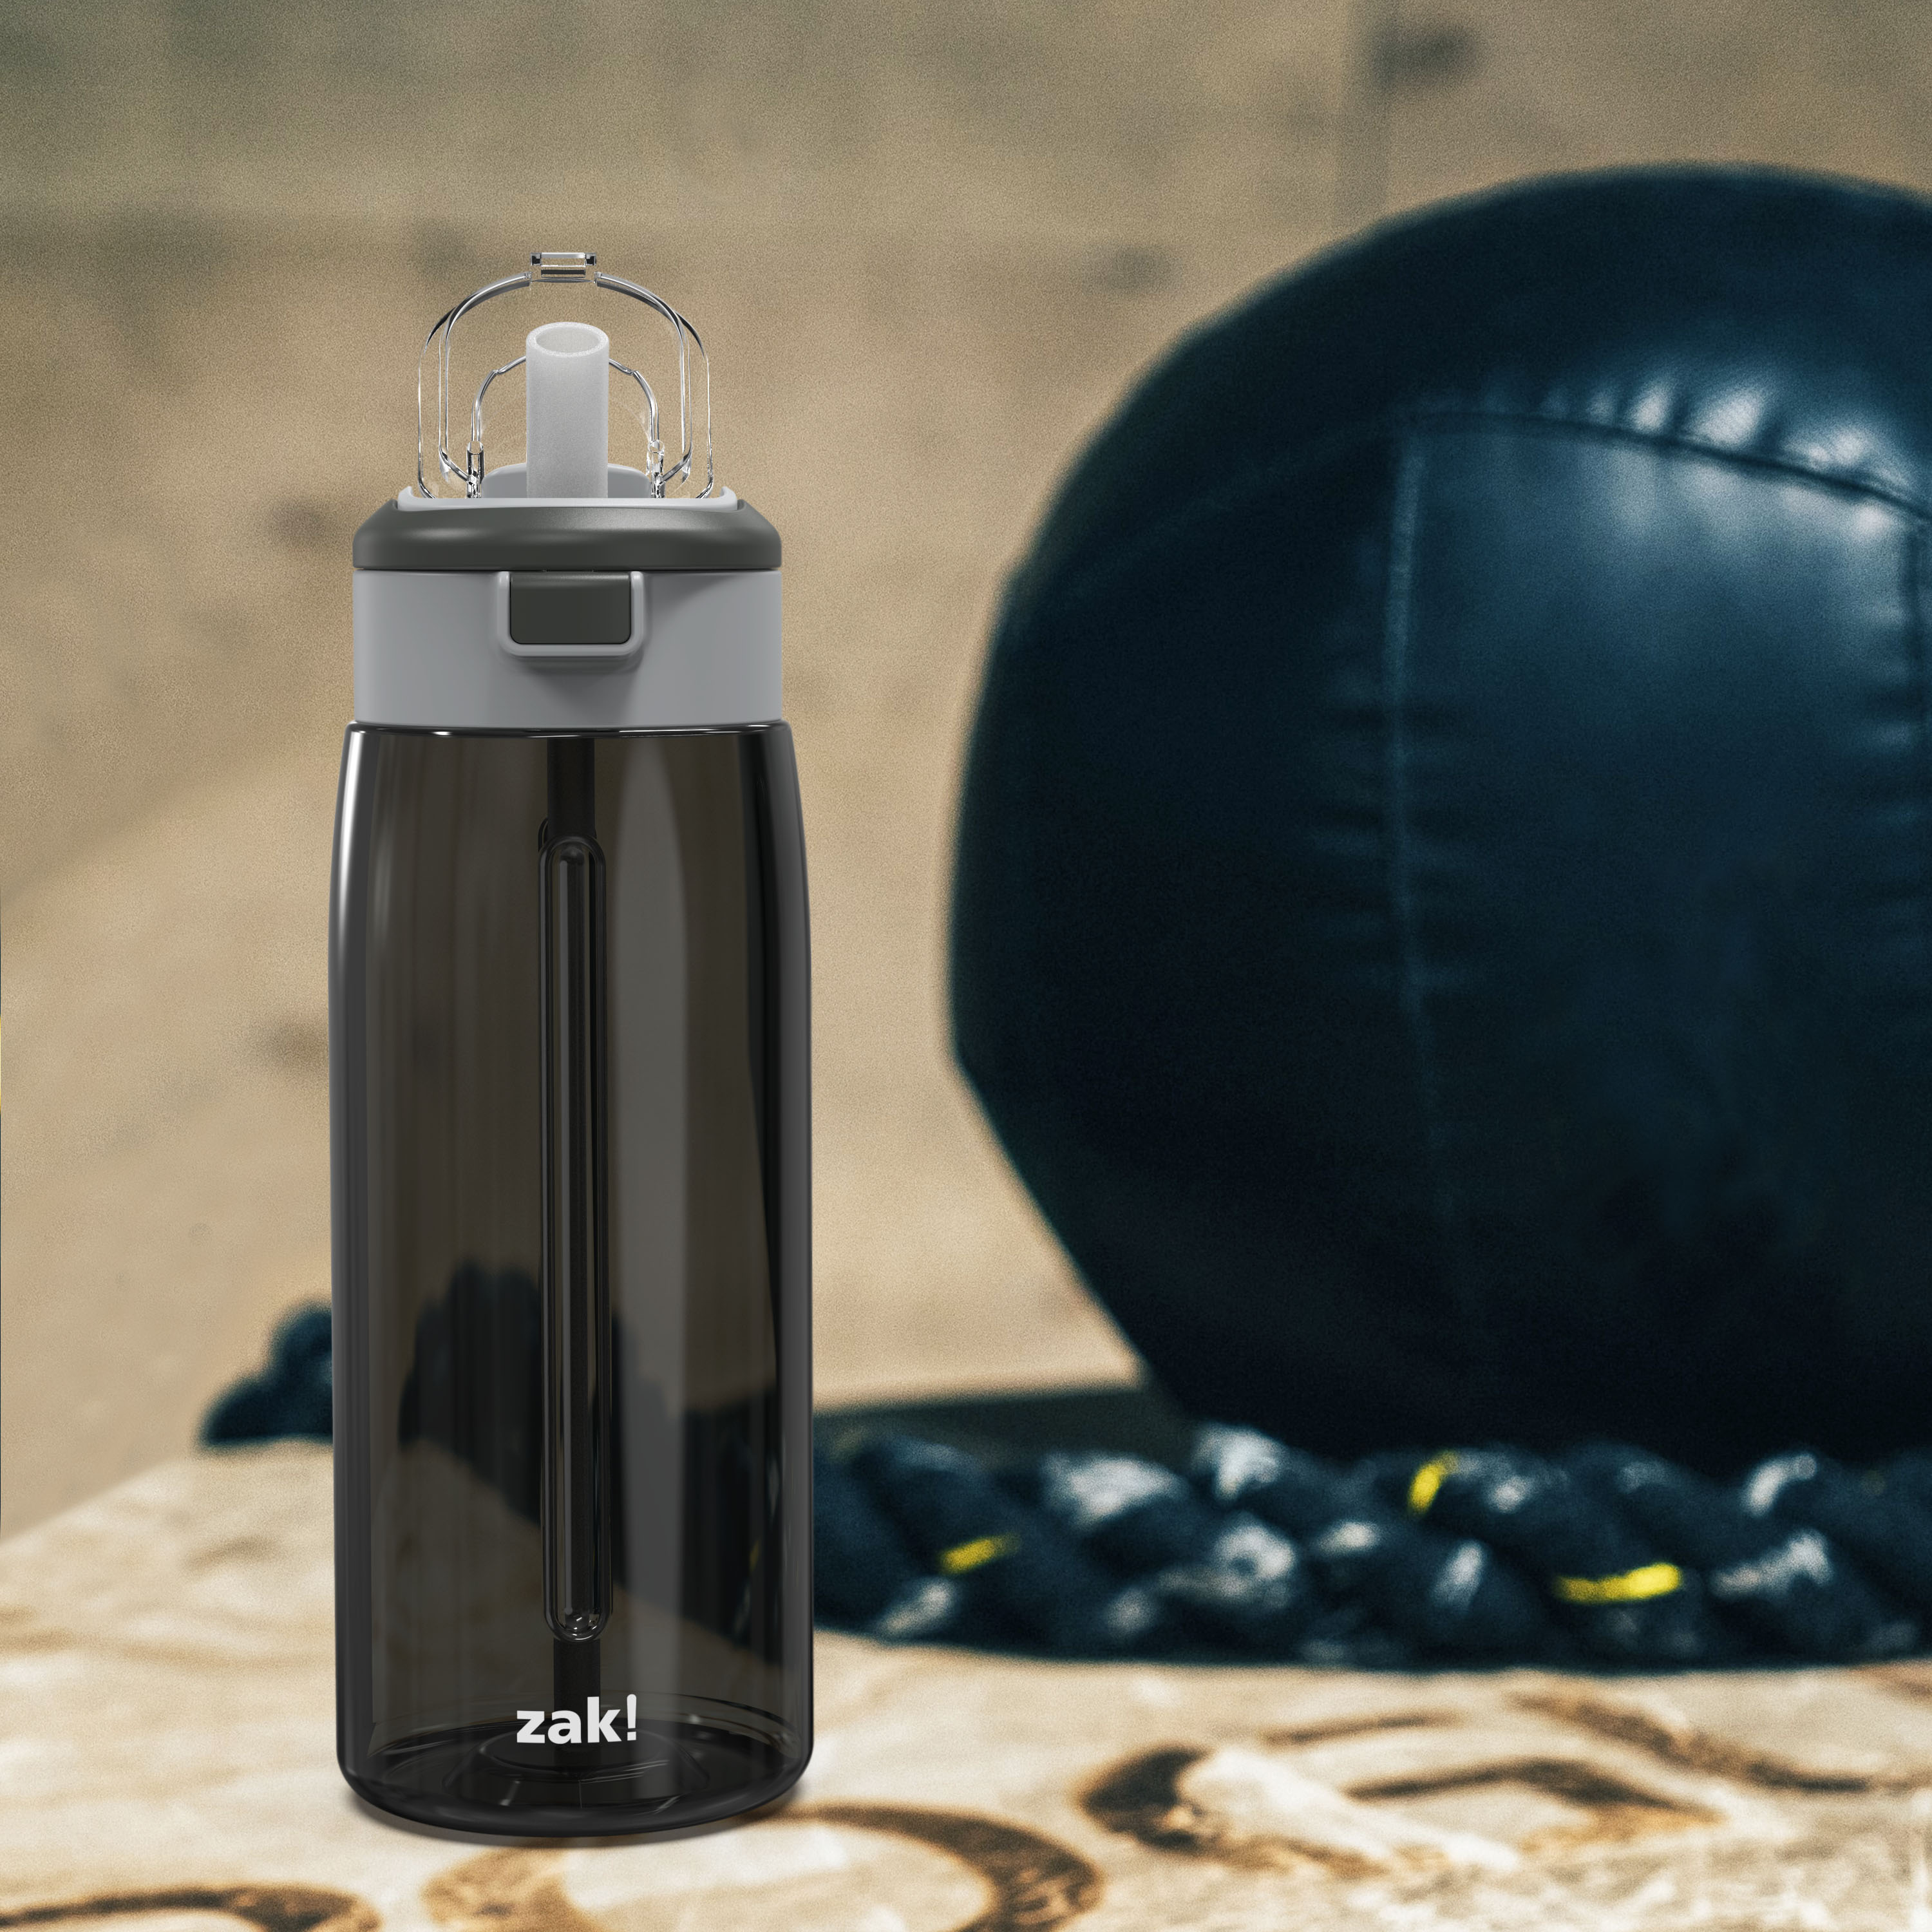 Genesis 32 ounce Reusable Plastic Water Bottle with Interchangeable Spouts, Charcoal slideshow image 2